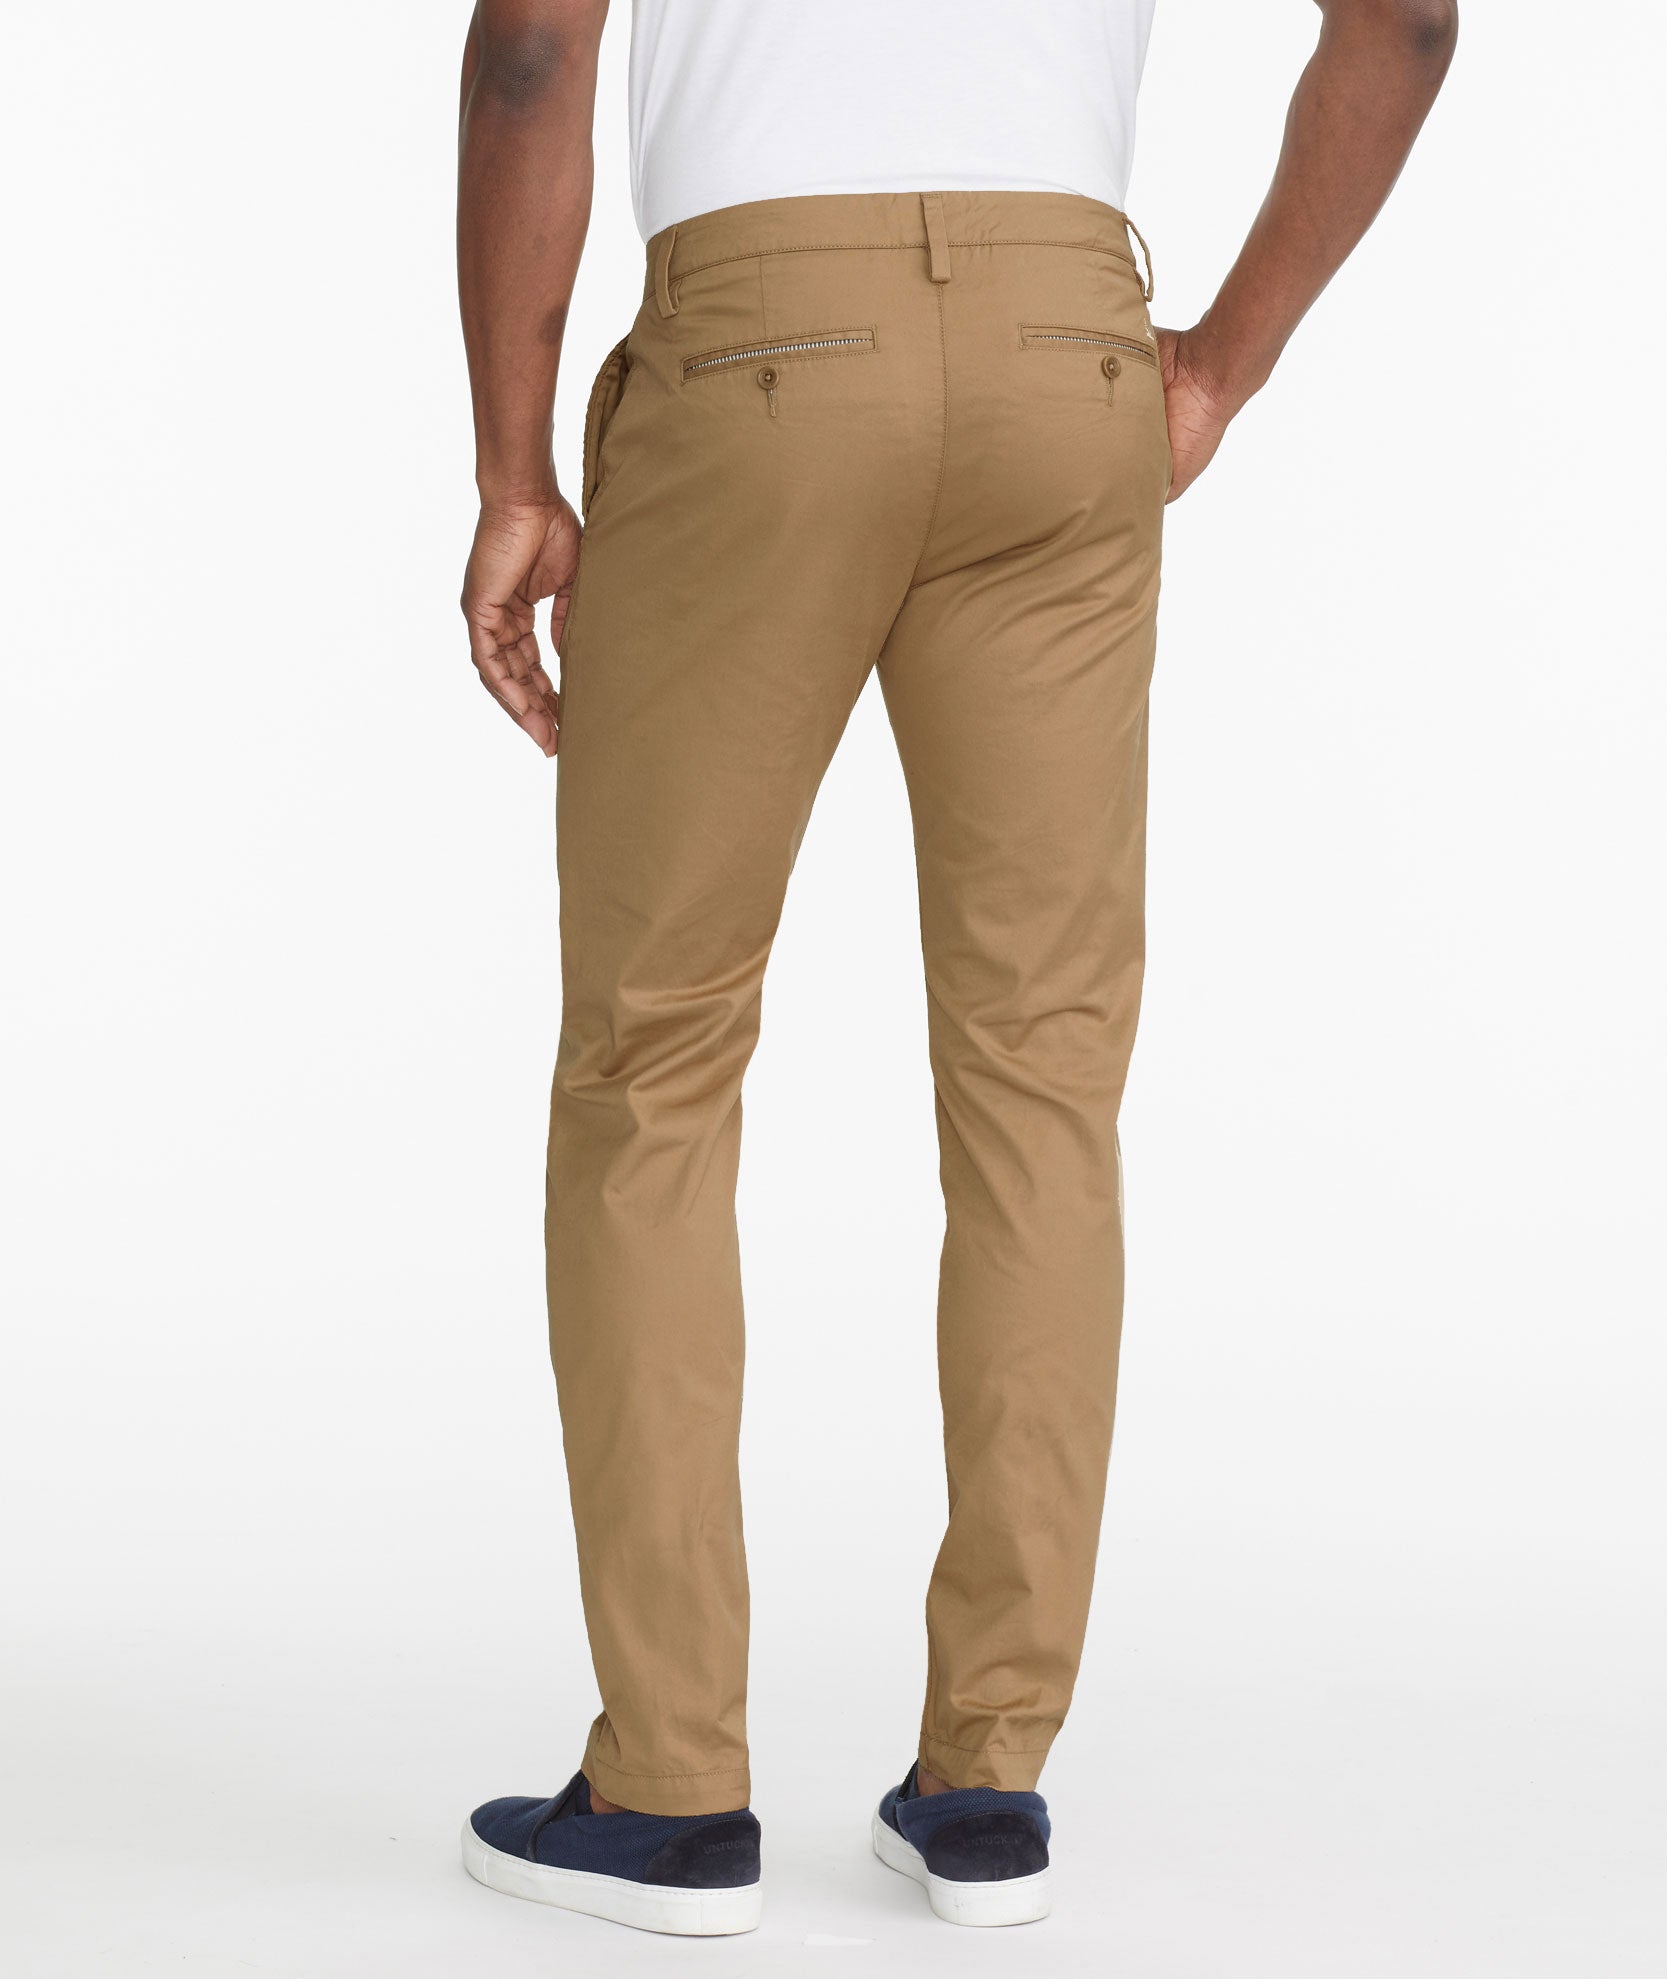 Homenesgenics Sale Clearance! Khaki Pants for Men Fashion Men Casual Work  Cotton Pure Elastic Waist Long Pants Trousers - Walmart.com